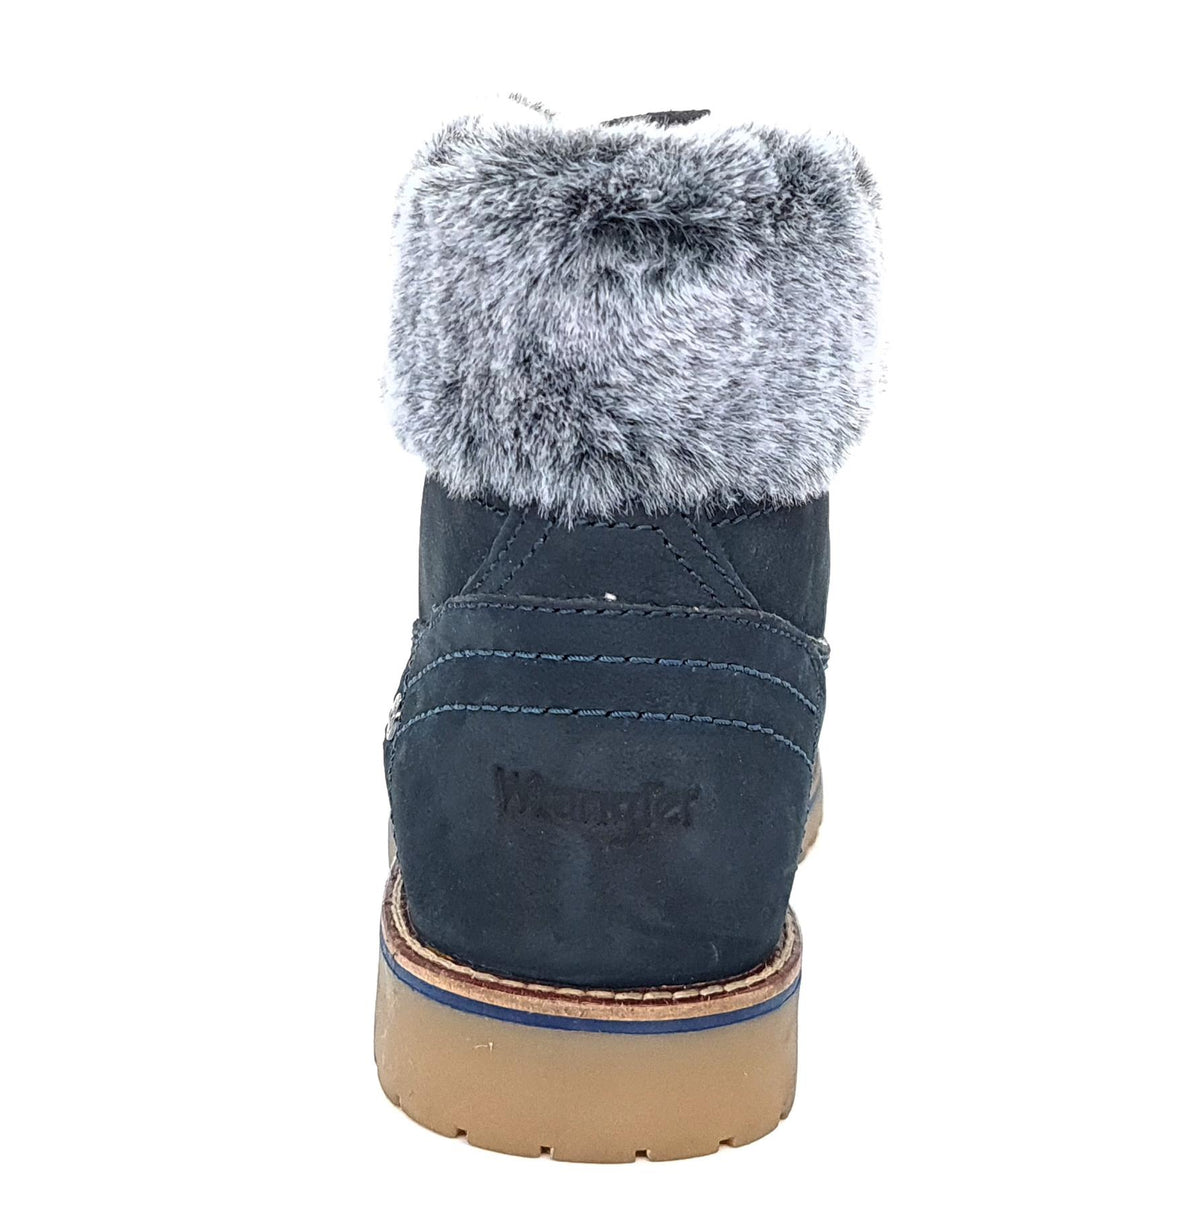 Wrangler Alaska Womens Warm Fleece Ankle Lace Boots